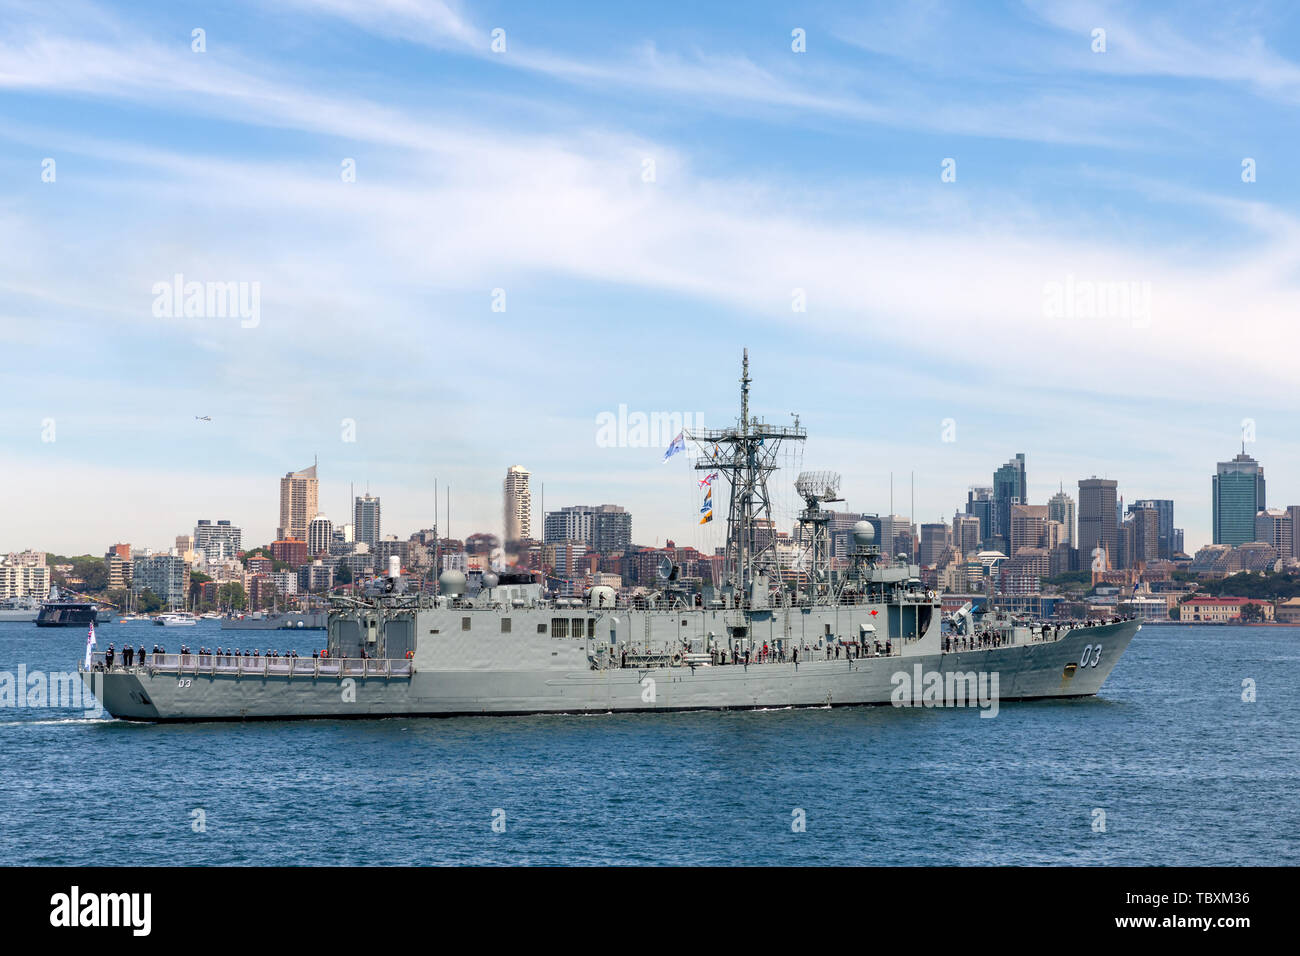 HMAS Sydney (FFG 03) Adelaide-class guided-missile frigate of the Royal Australian Navy in Sydney Harbor. Stock Photo